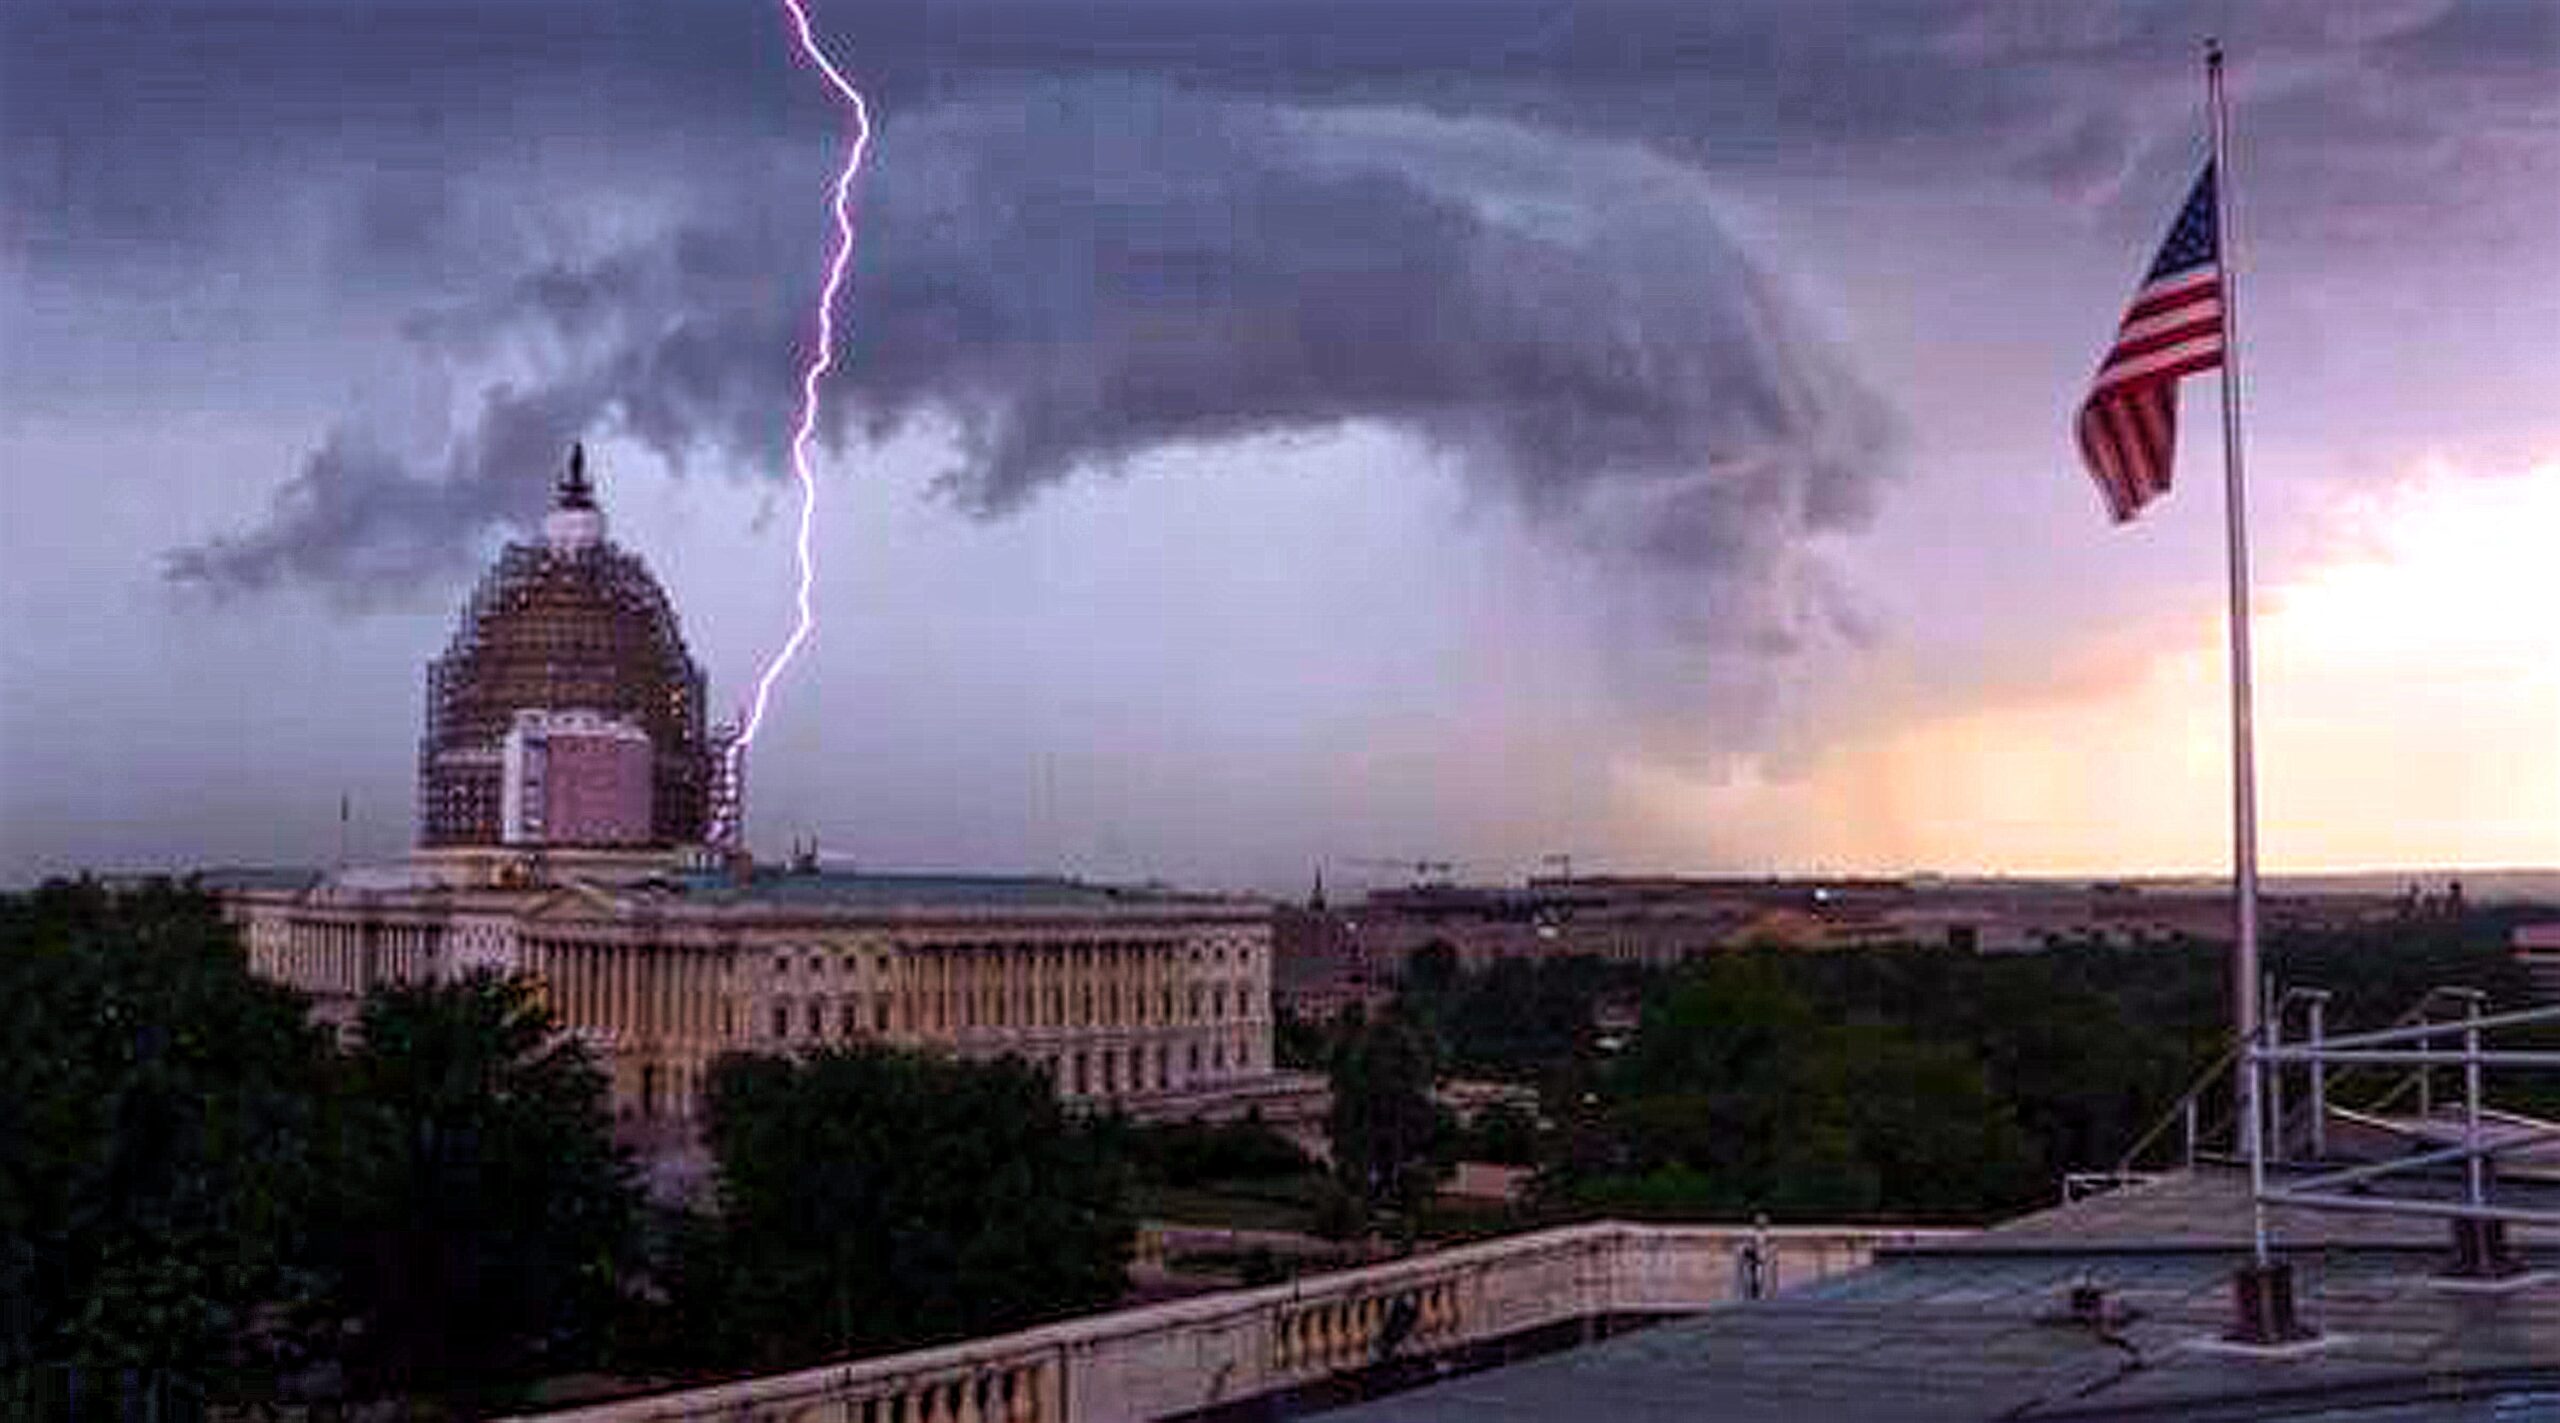 Lightning striking near the U.S. Capitol